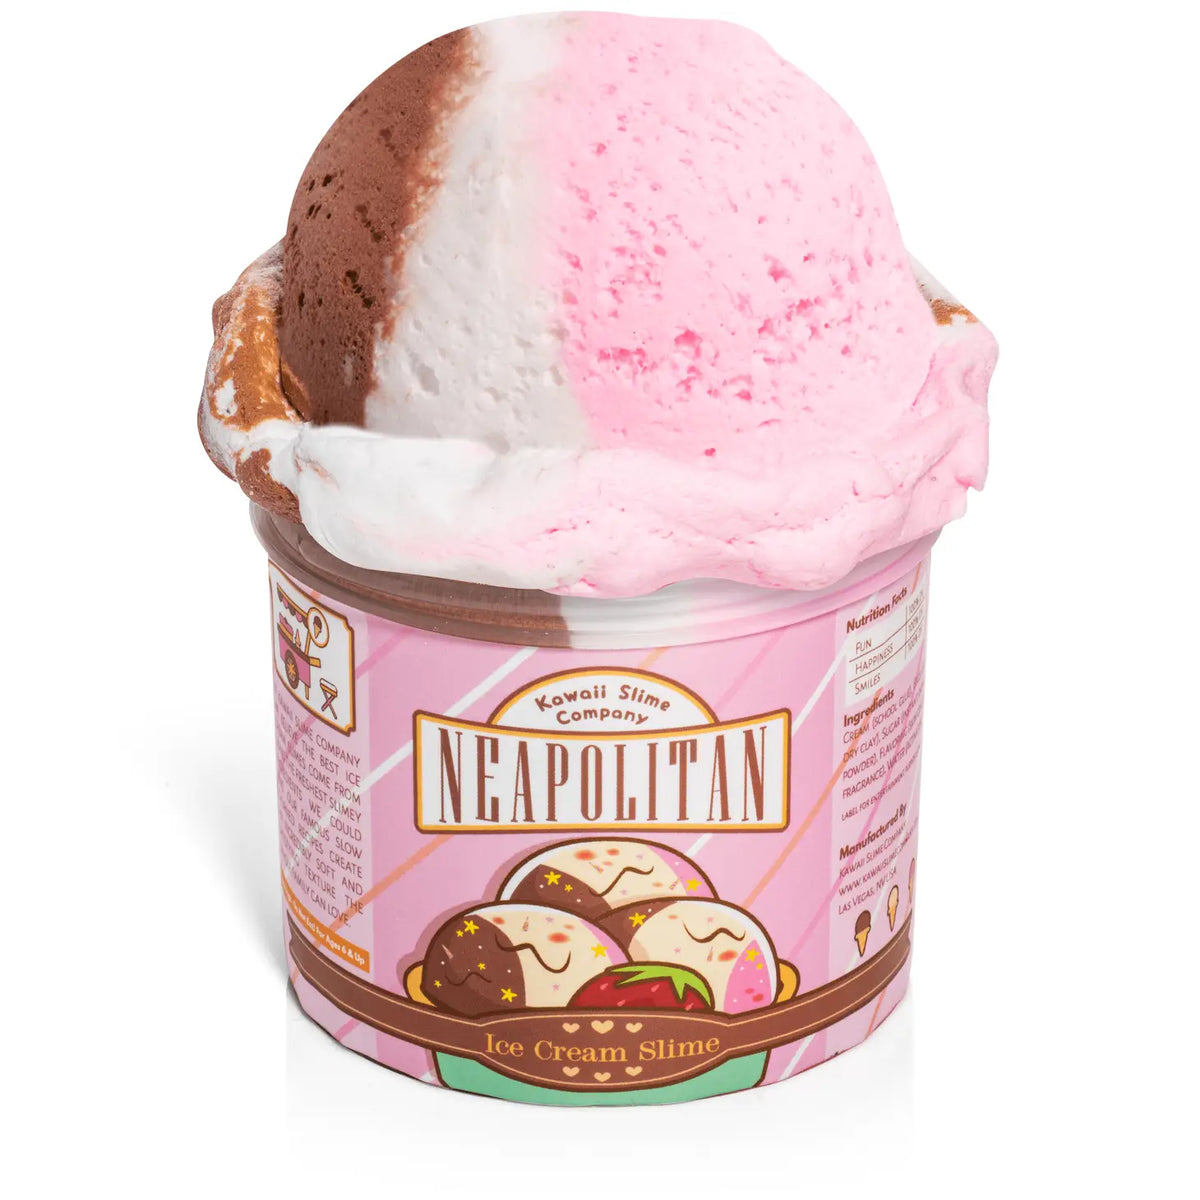 Ice Cream Pint Slime: Neapolitan Cover